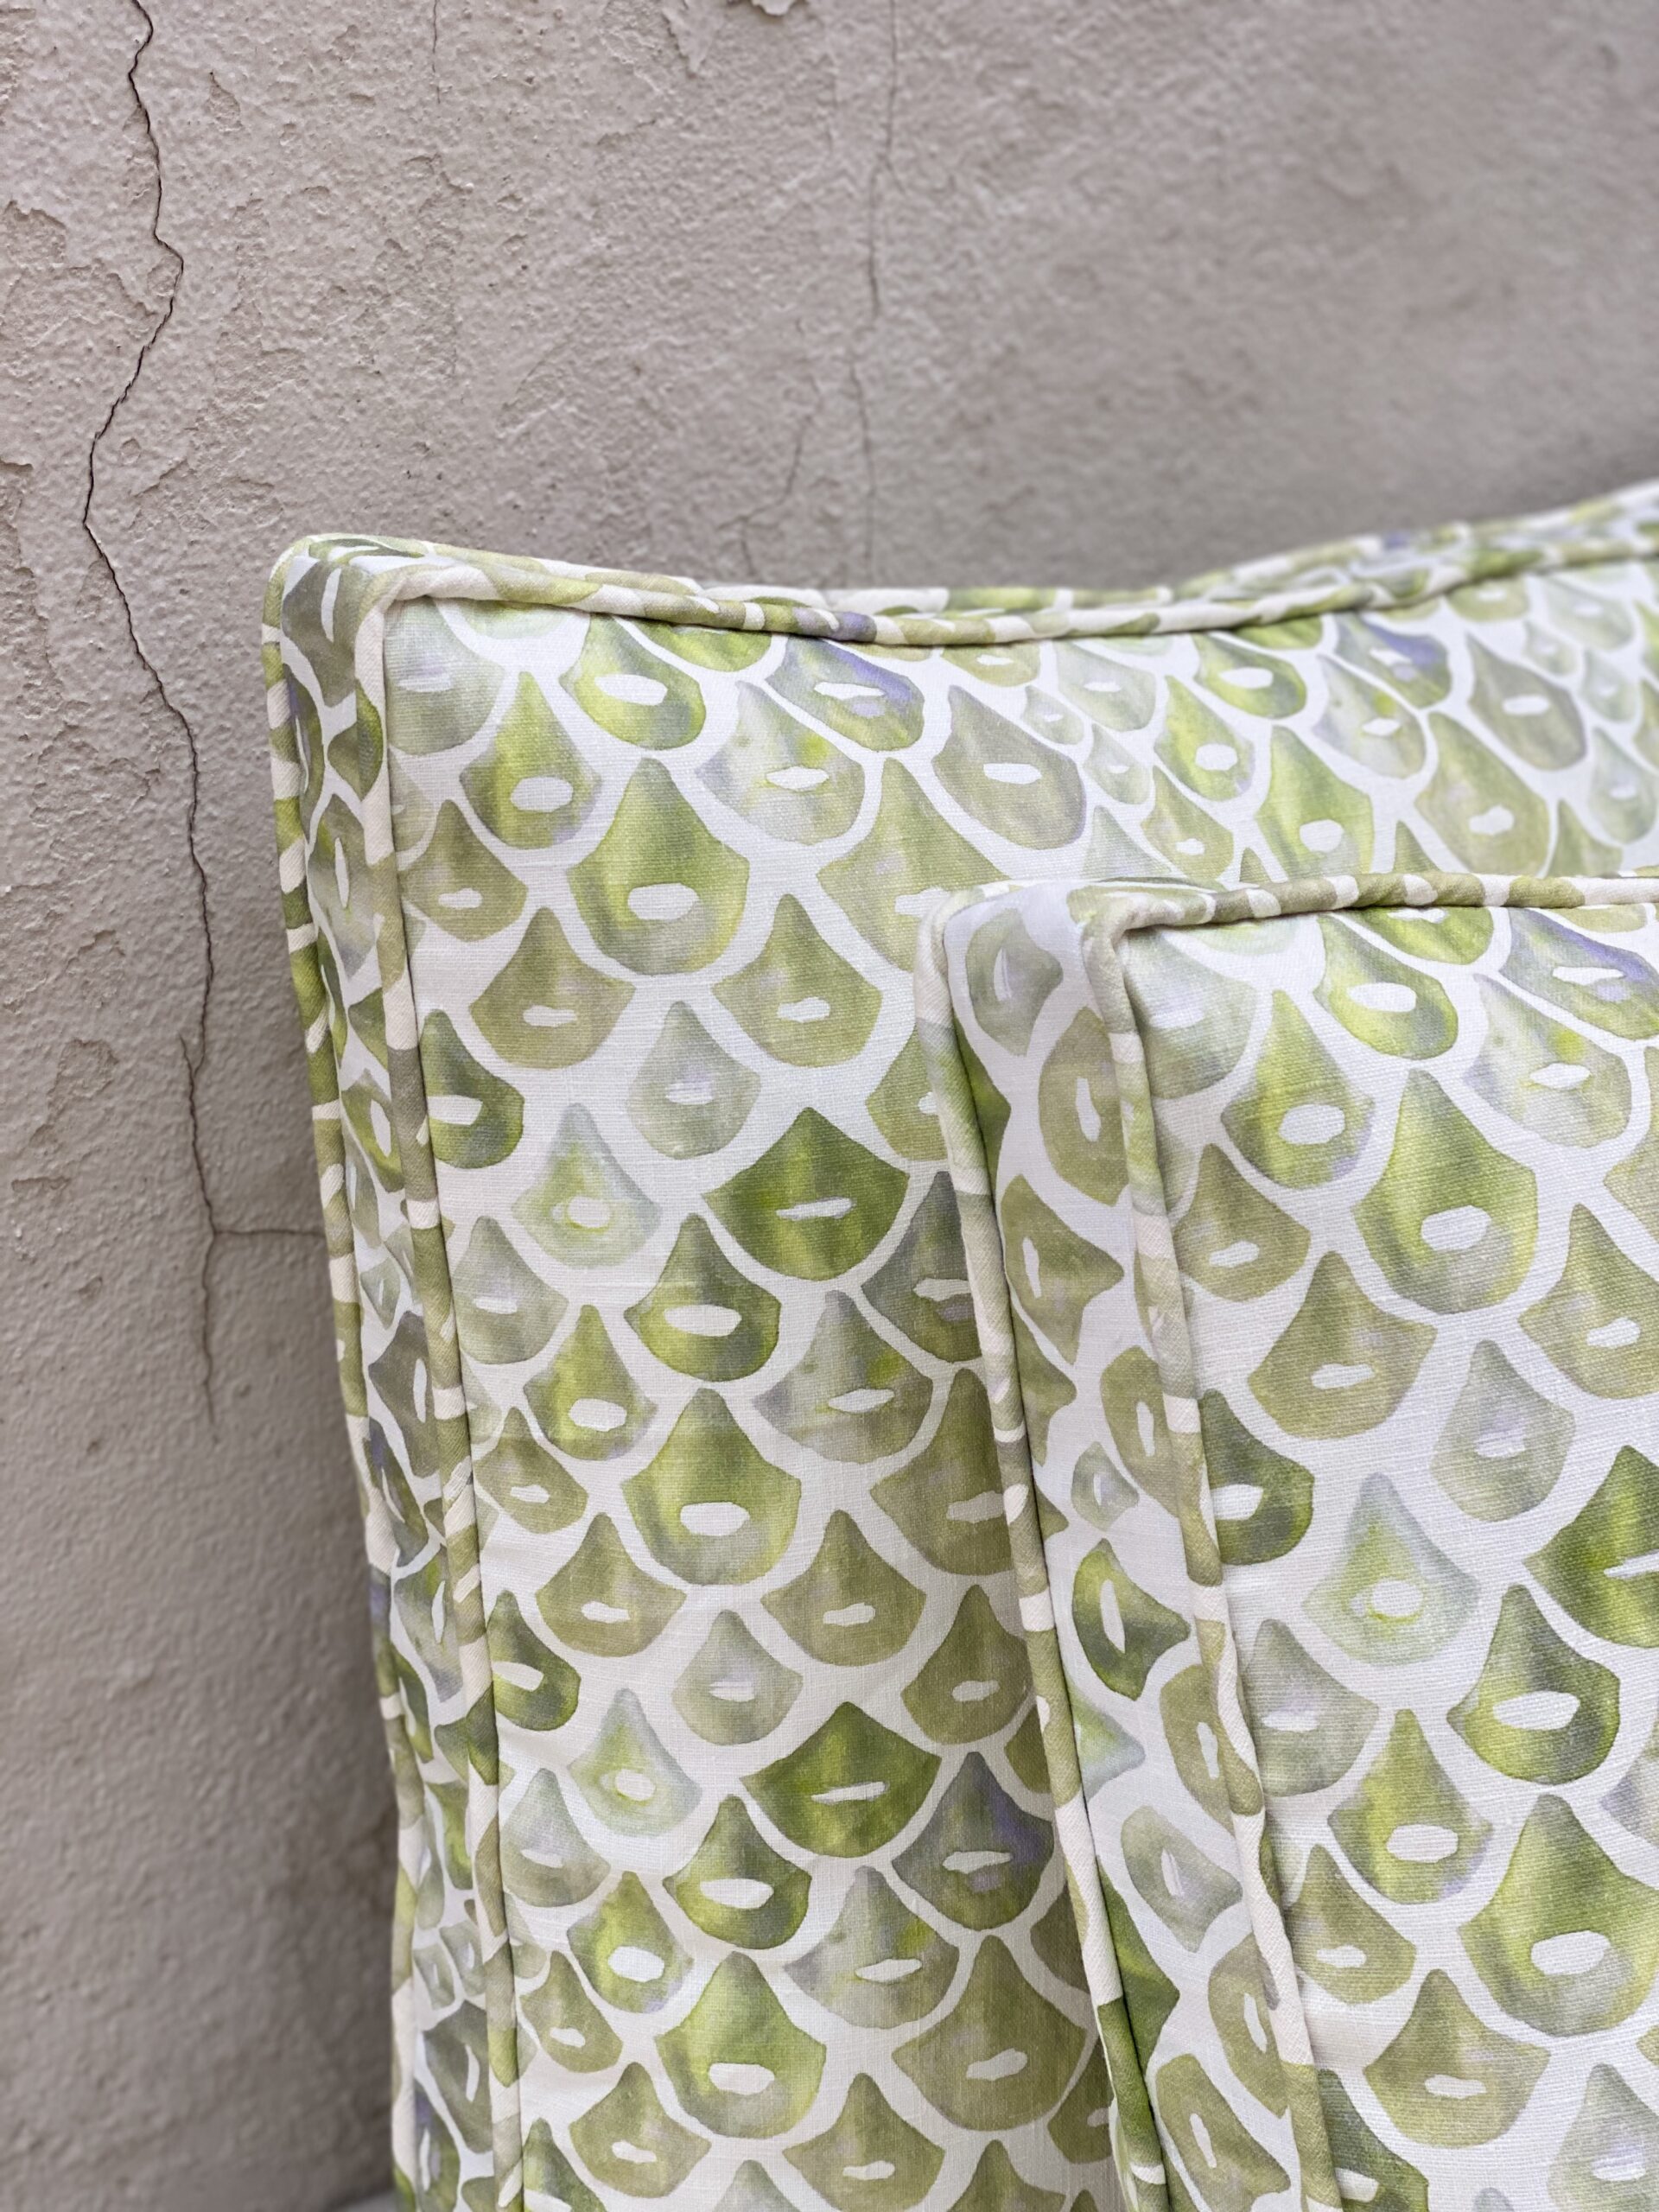 Textiles by Smith Scales Pillows